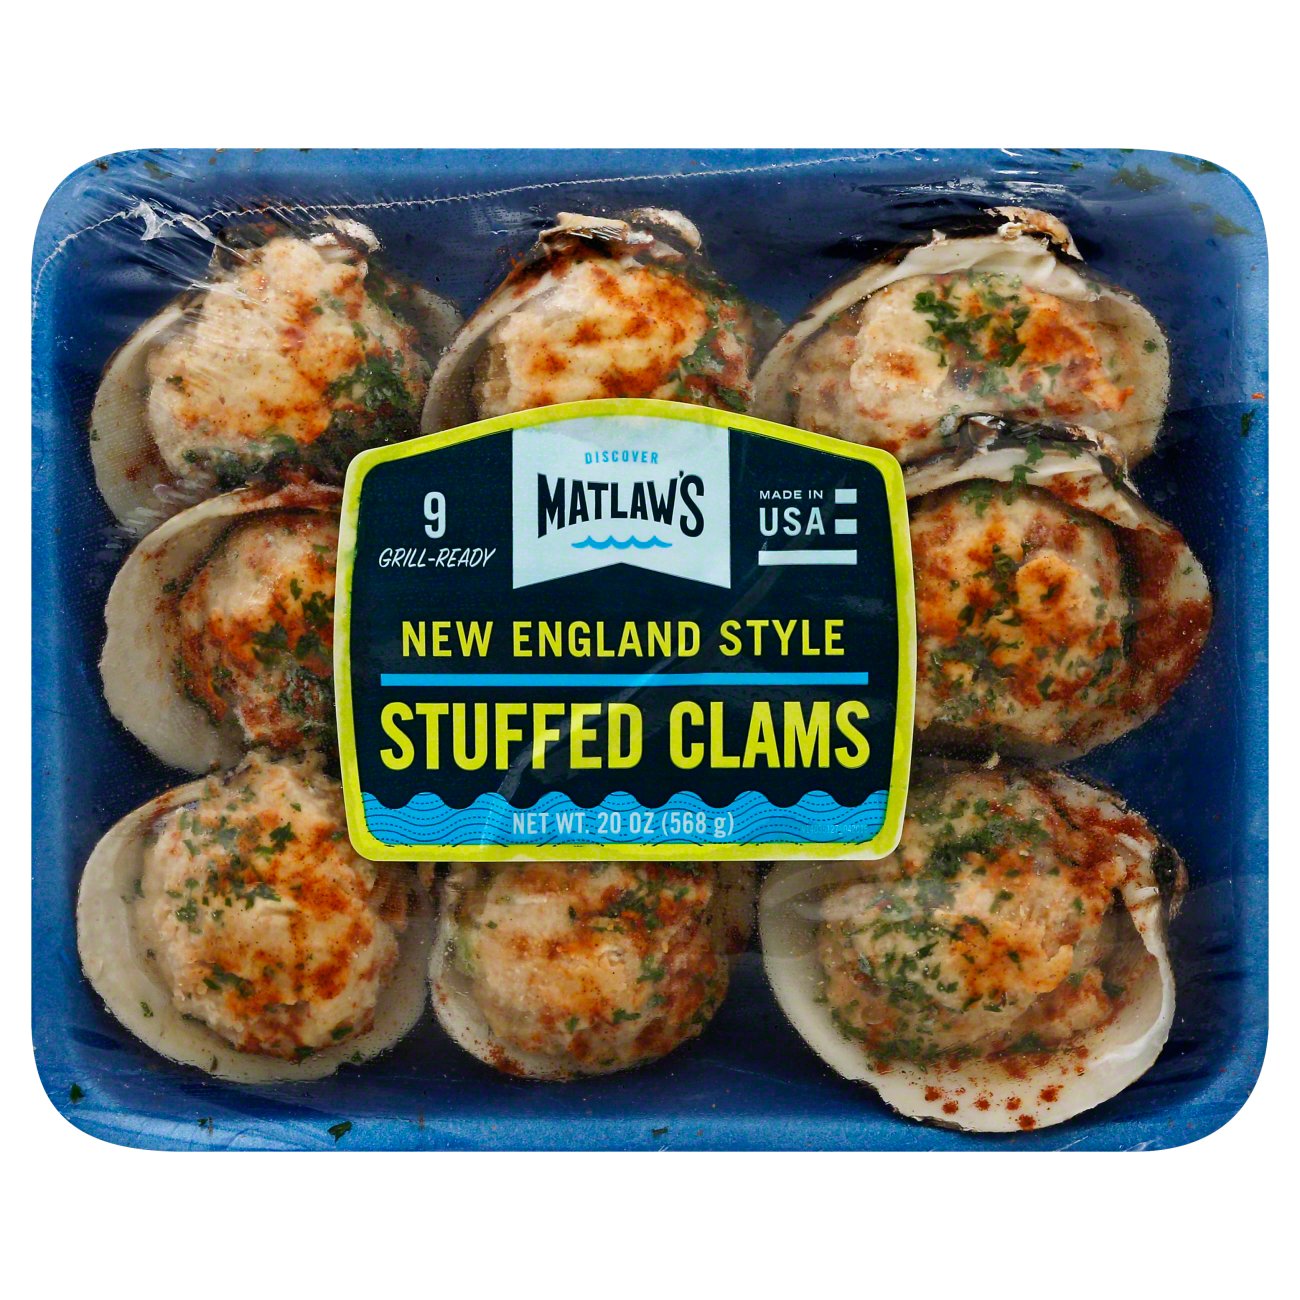 New England Style Stuffed Clams